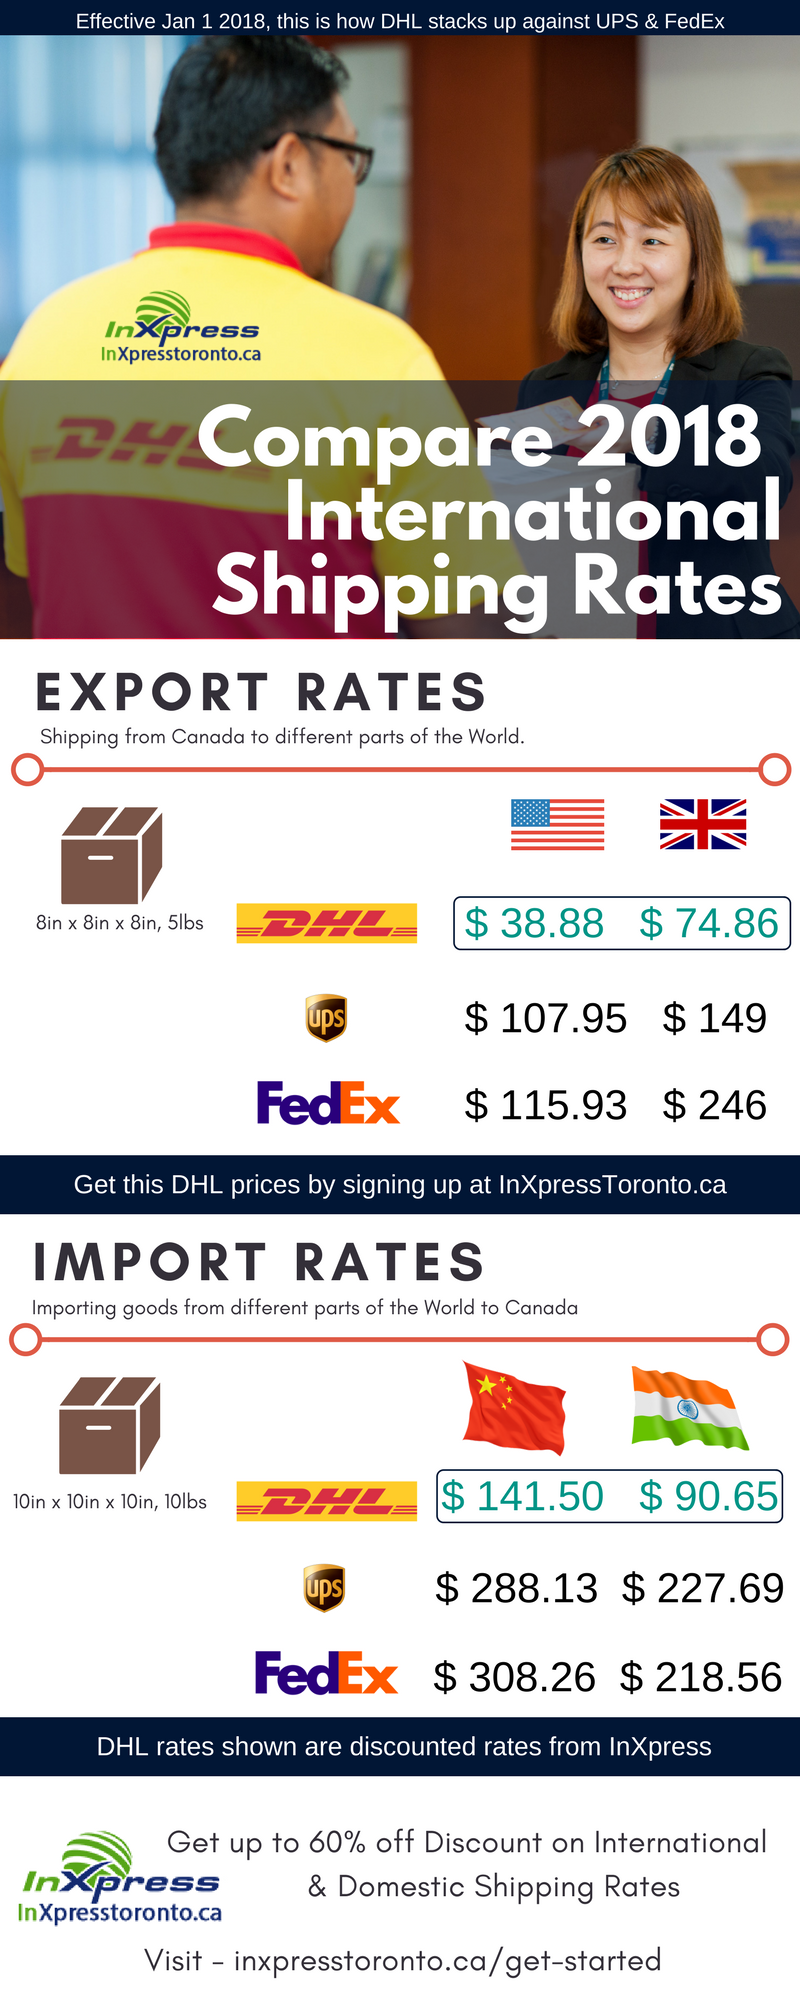 2018 International Shipping Rate Comparison: DHL vs UPS vs FedEx